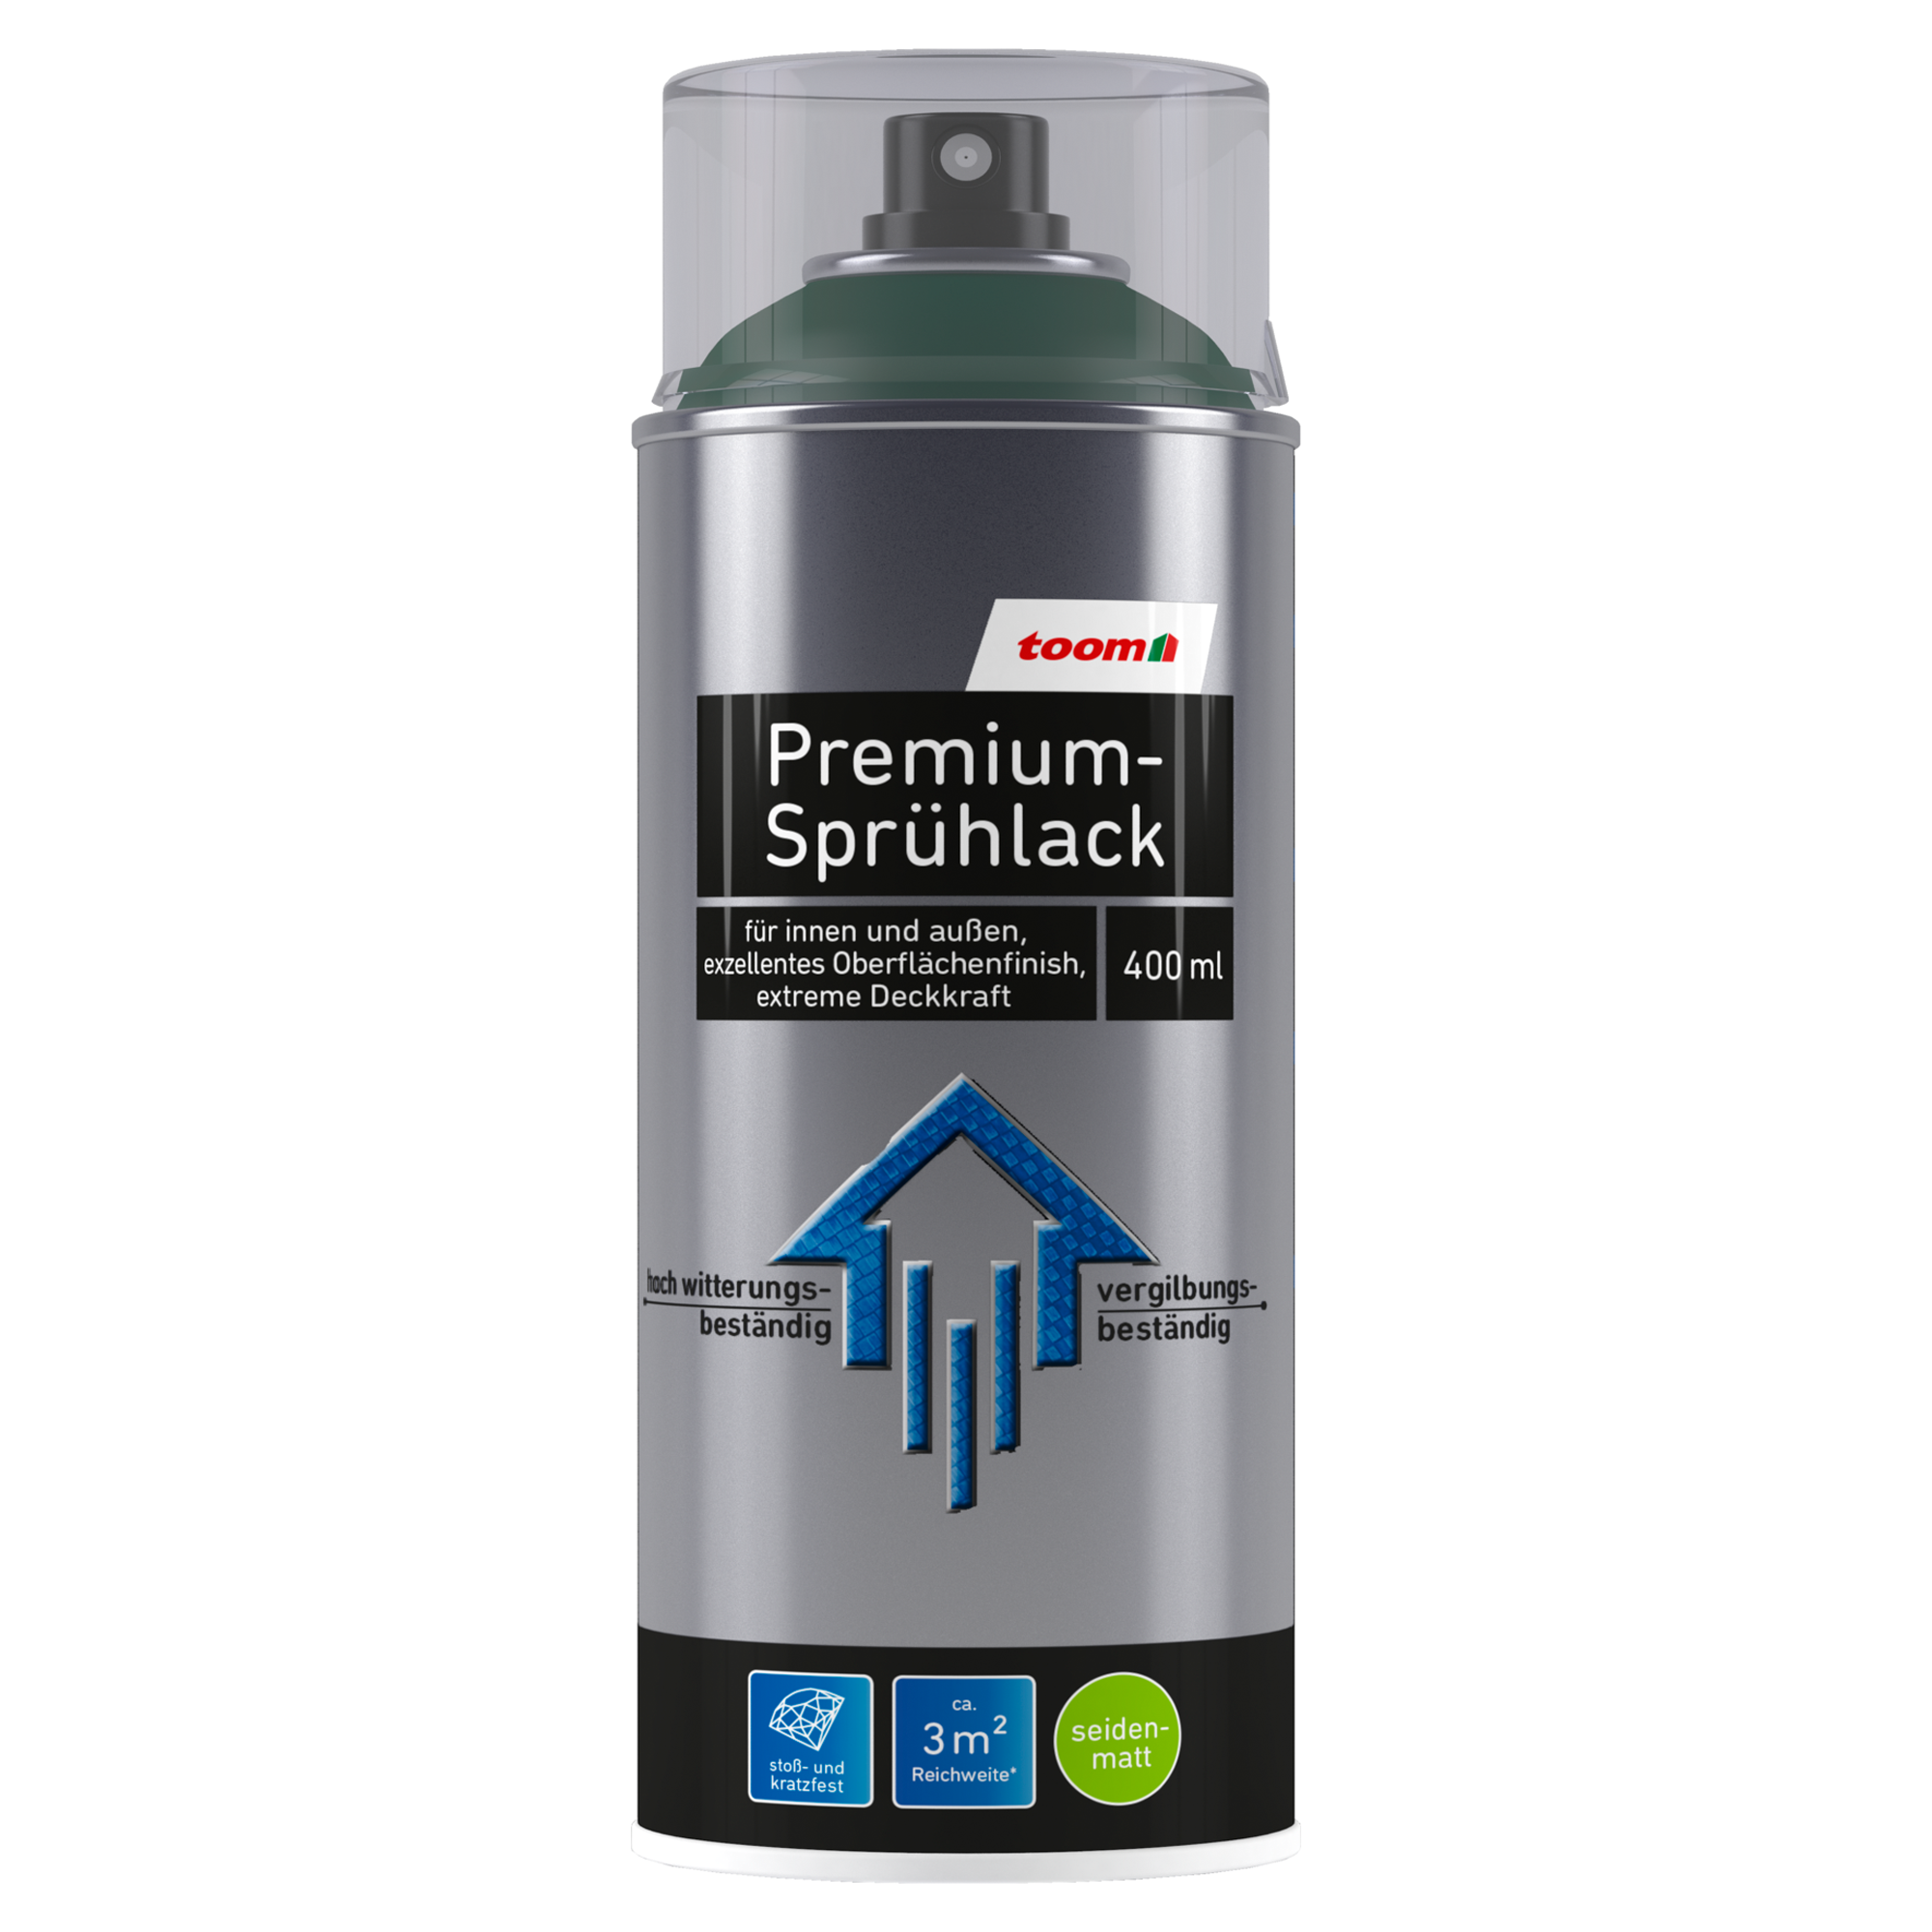 Premium-Sprühlack moosgrün seidenmatt 400 ml + product picture